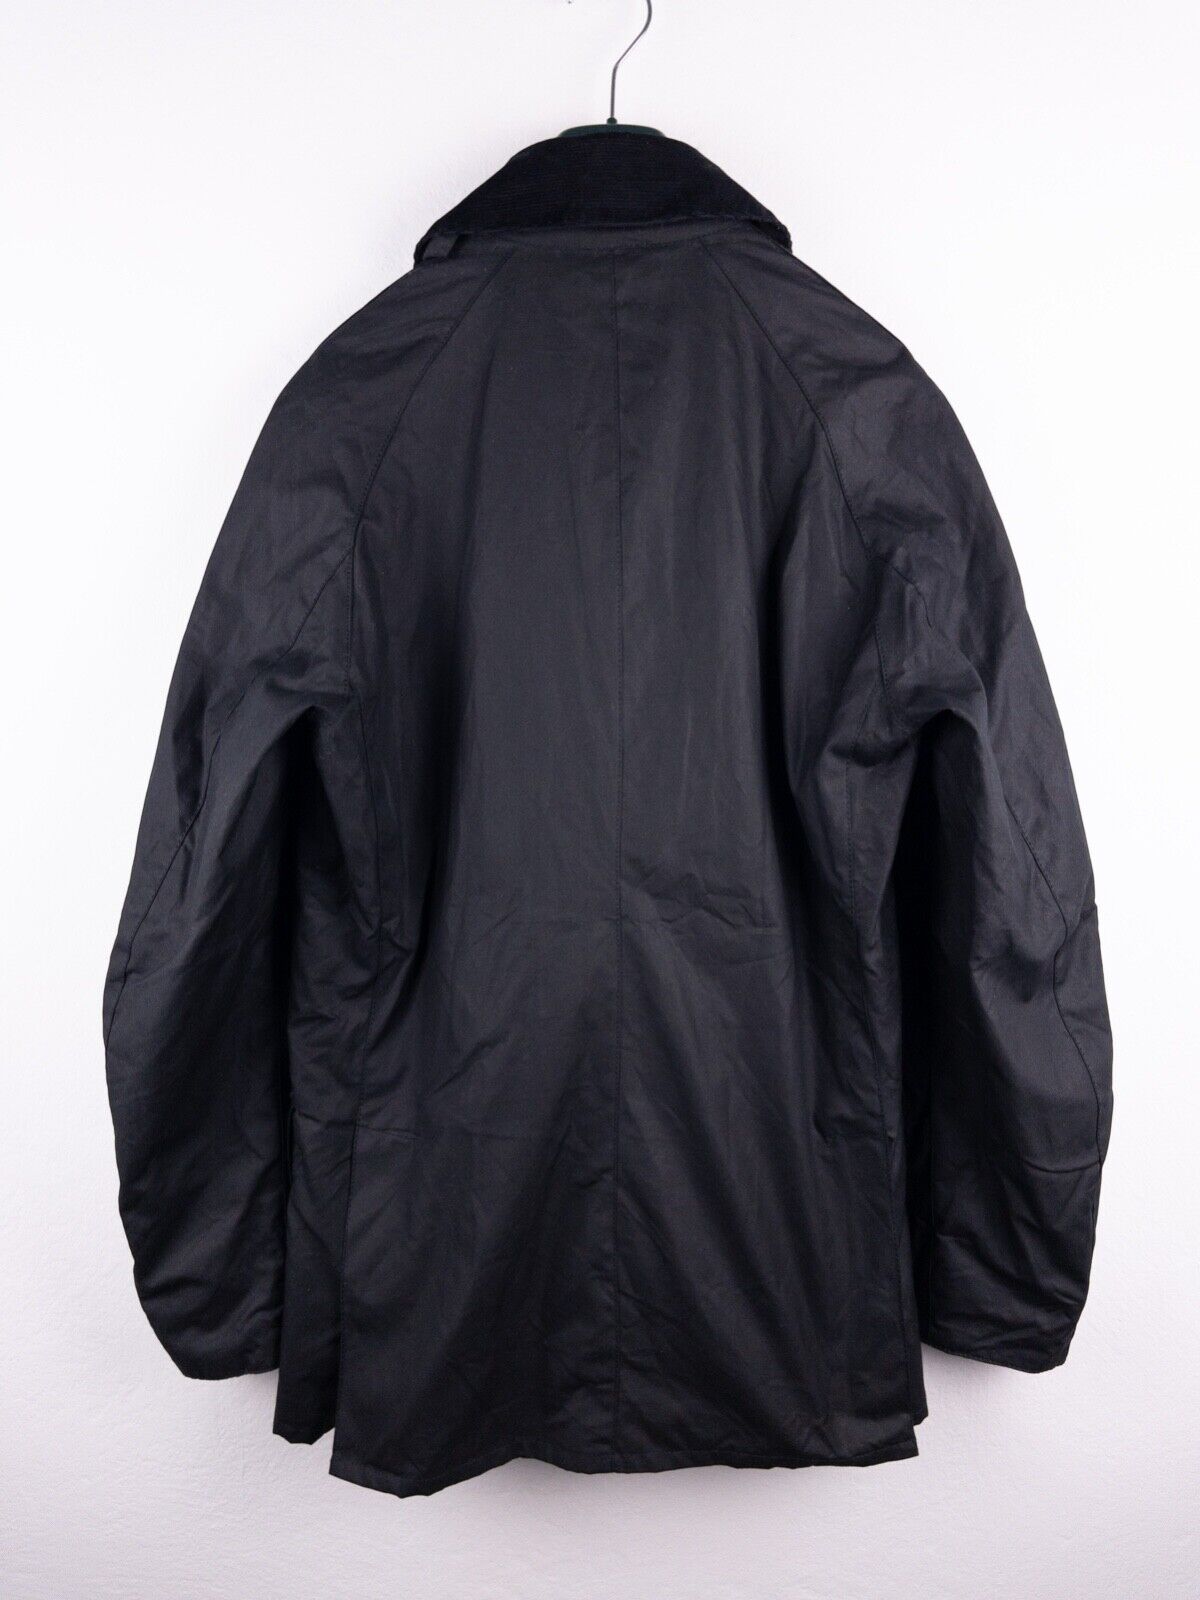 Barbour Ashby Wax Jacket Men's Size S - image 3